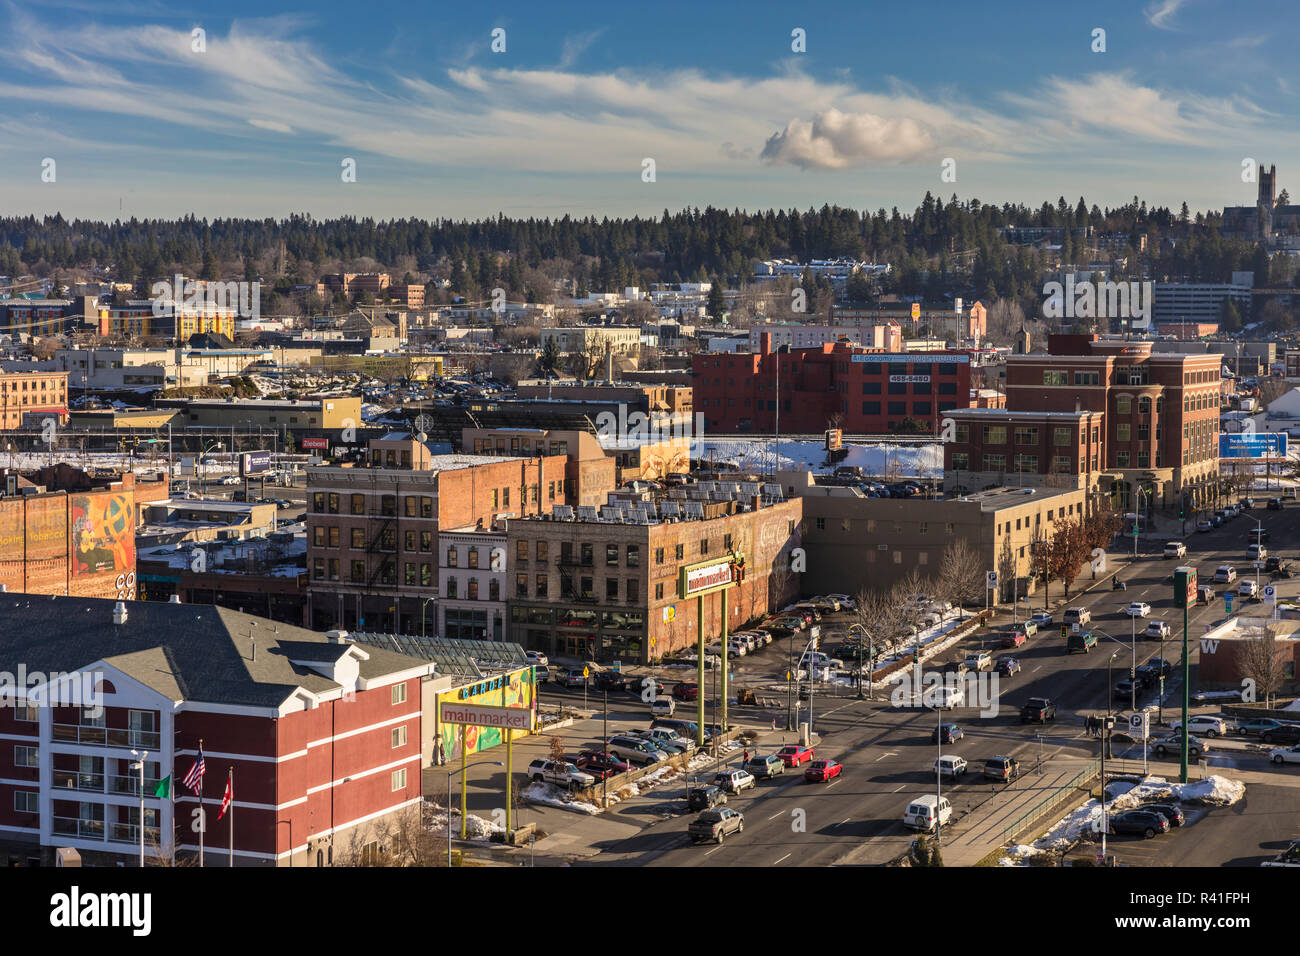 Looking down North Browne Street in downtown Spokane, Washington State, USA Stock Photo